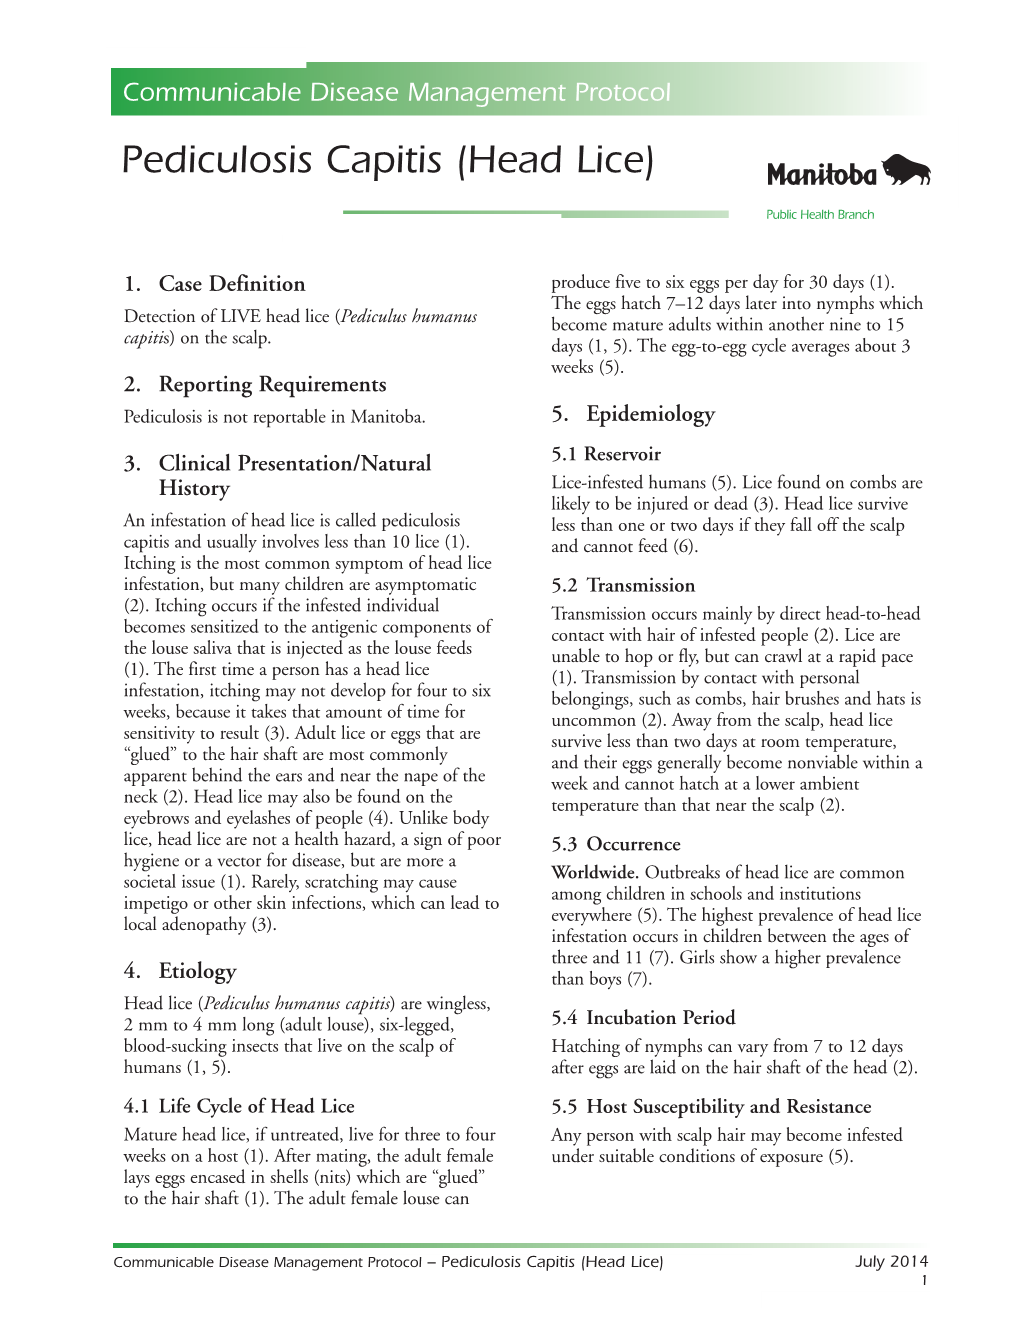 Pediculosis Capitis (Head Lice) Protocol